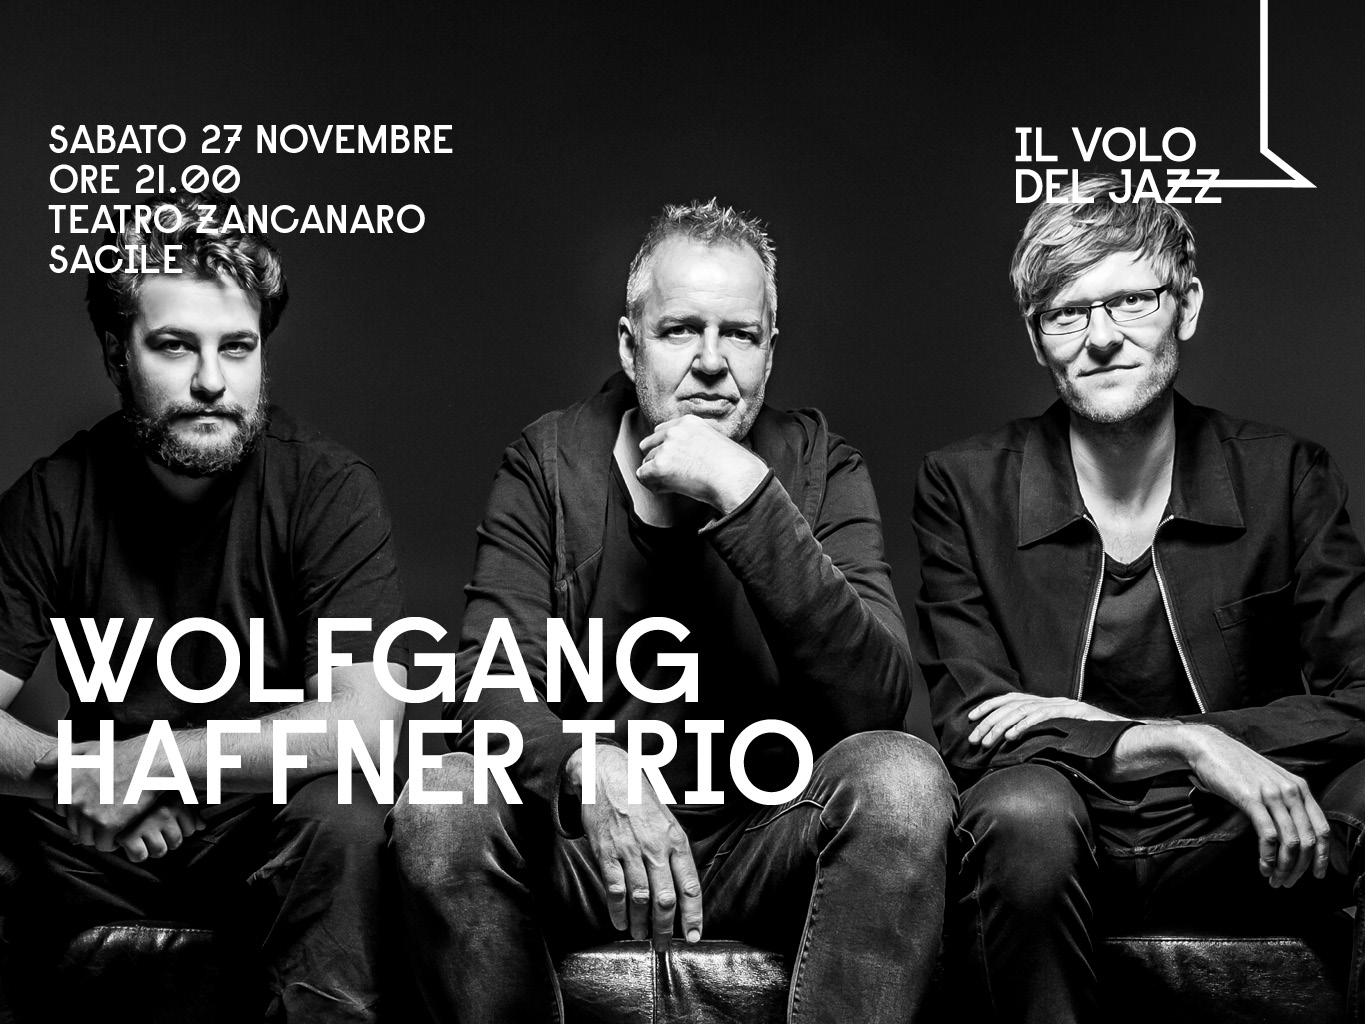 Wolfgang Haffner Trio